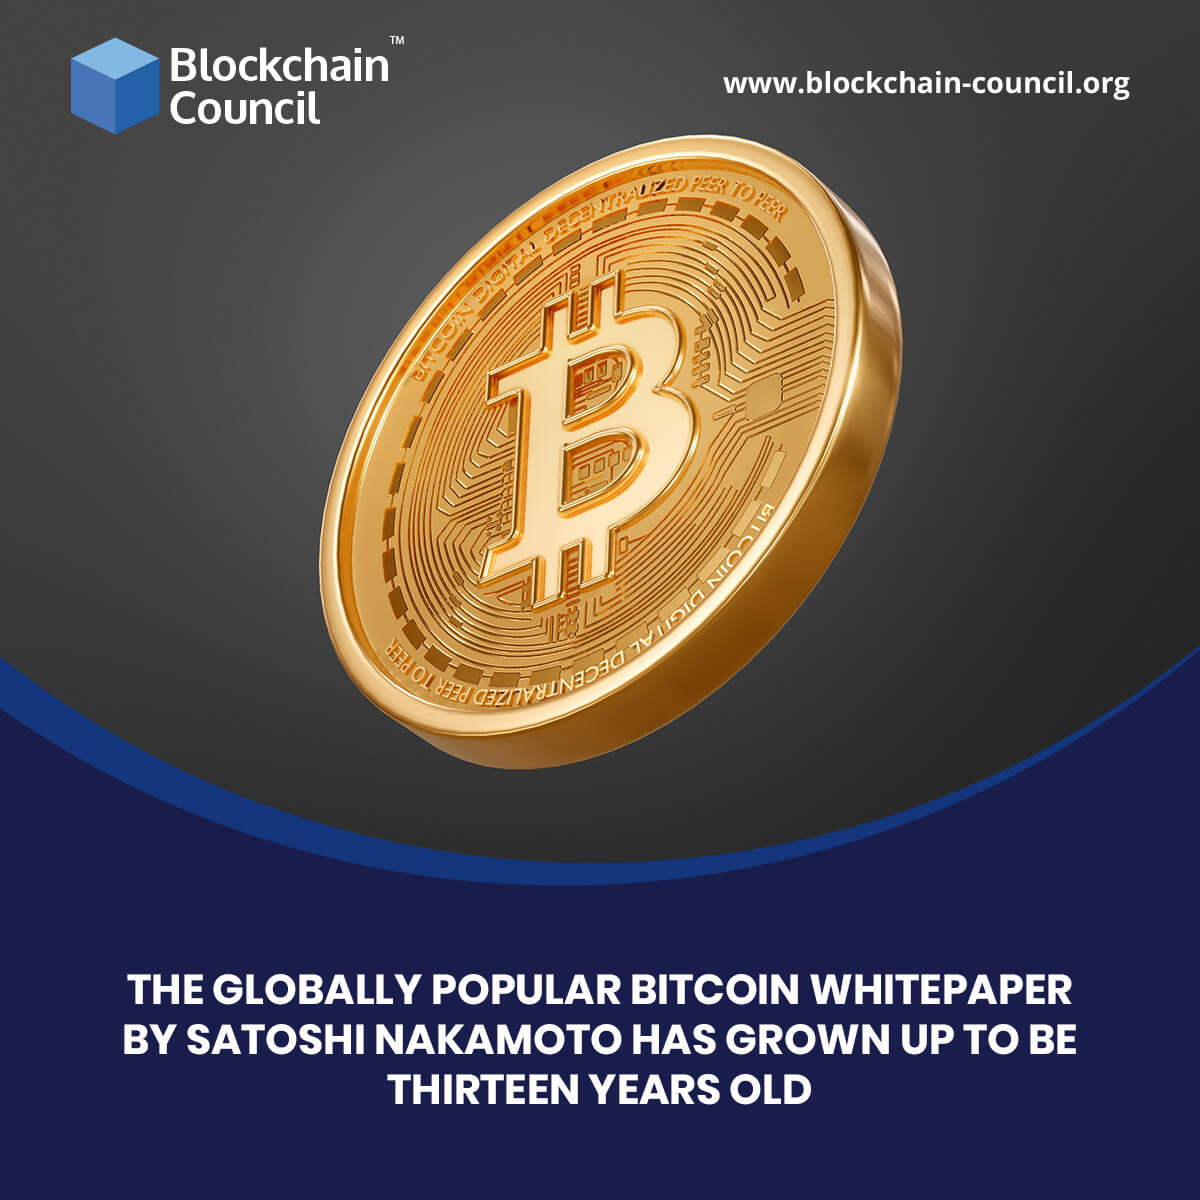 The Globally Popular Bitcoin Whitepaper By Satoshi Nakamoto Has Grown Up To Be Thirteen Years Old